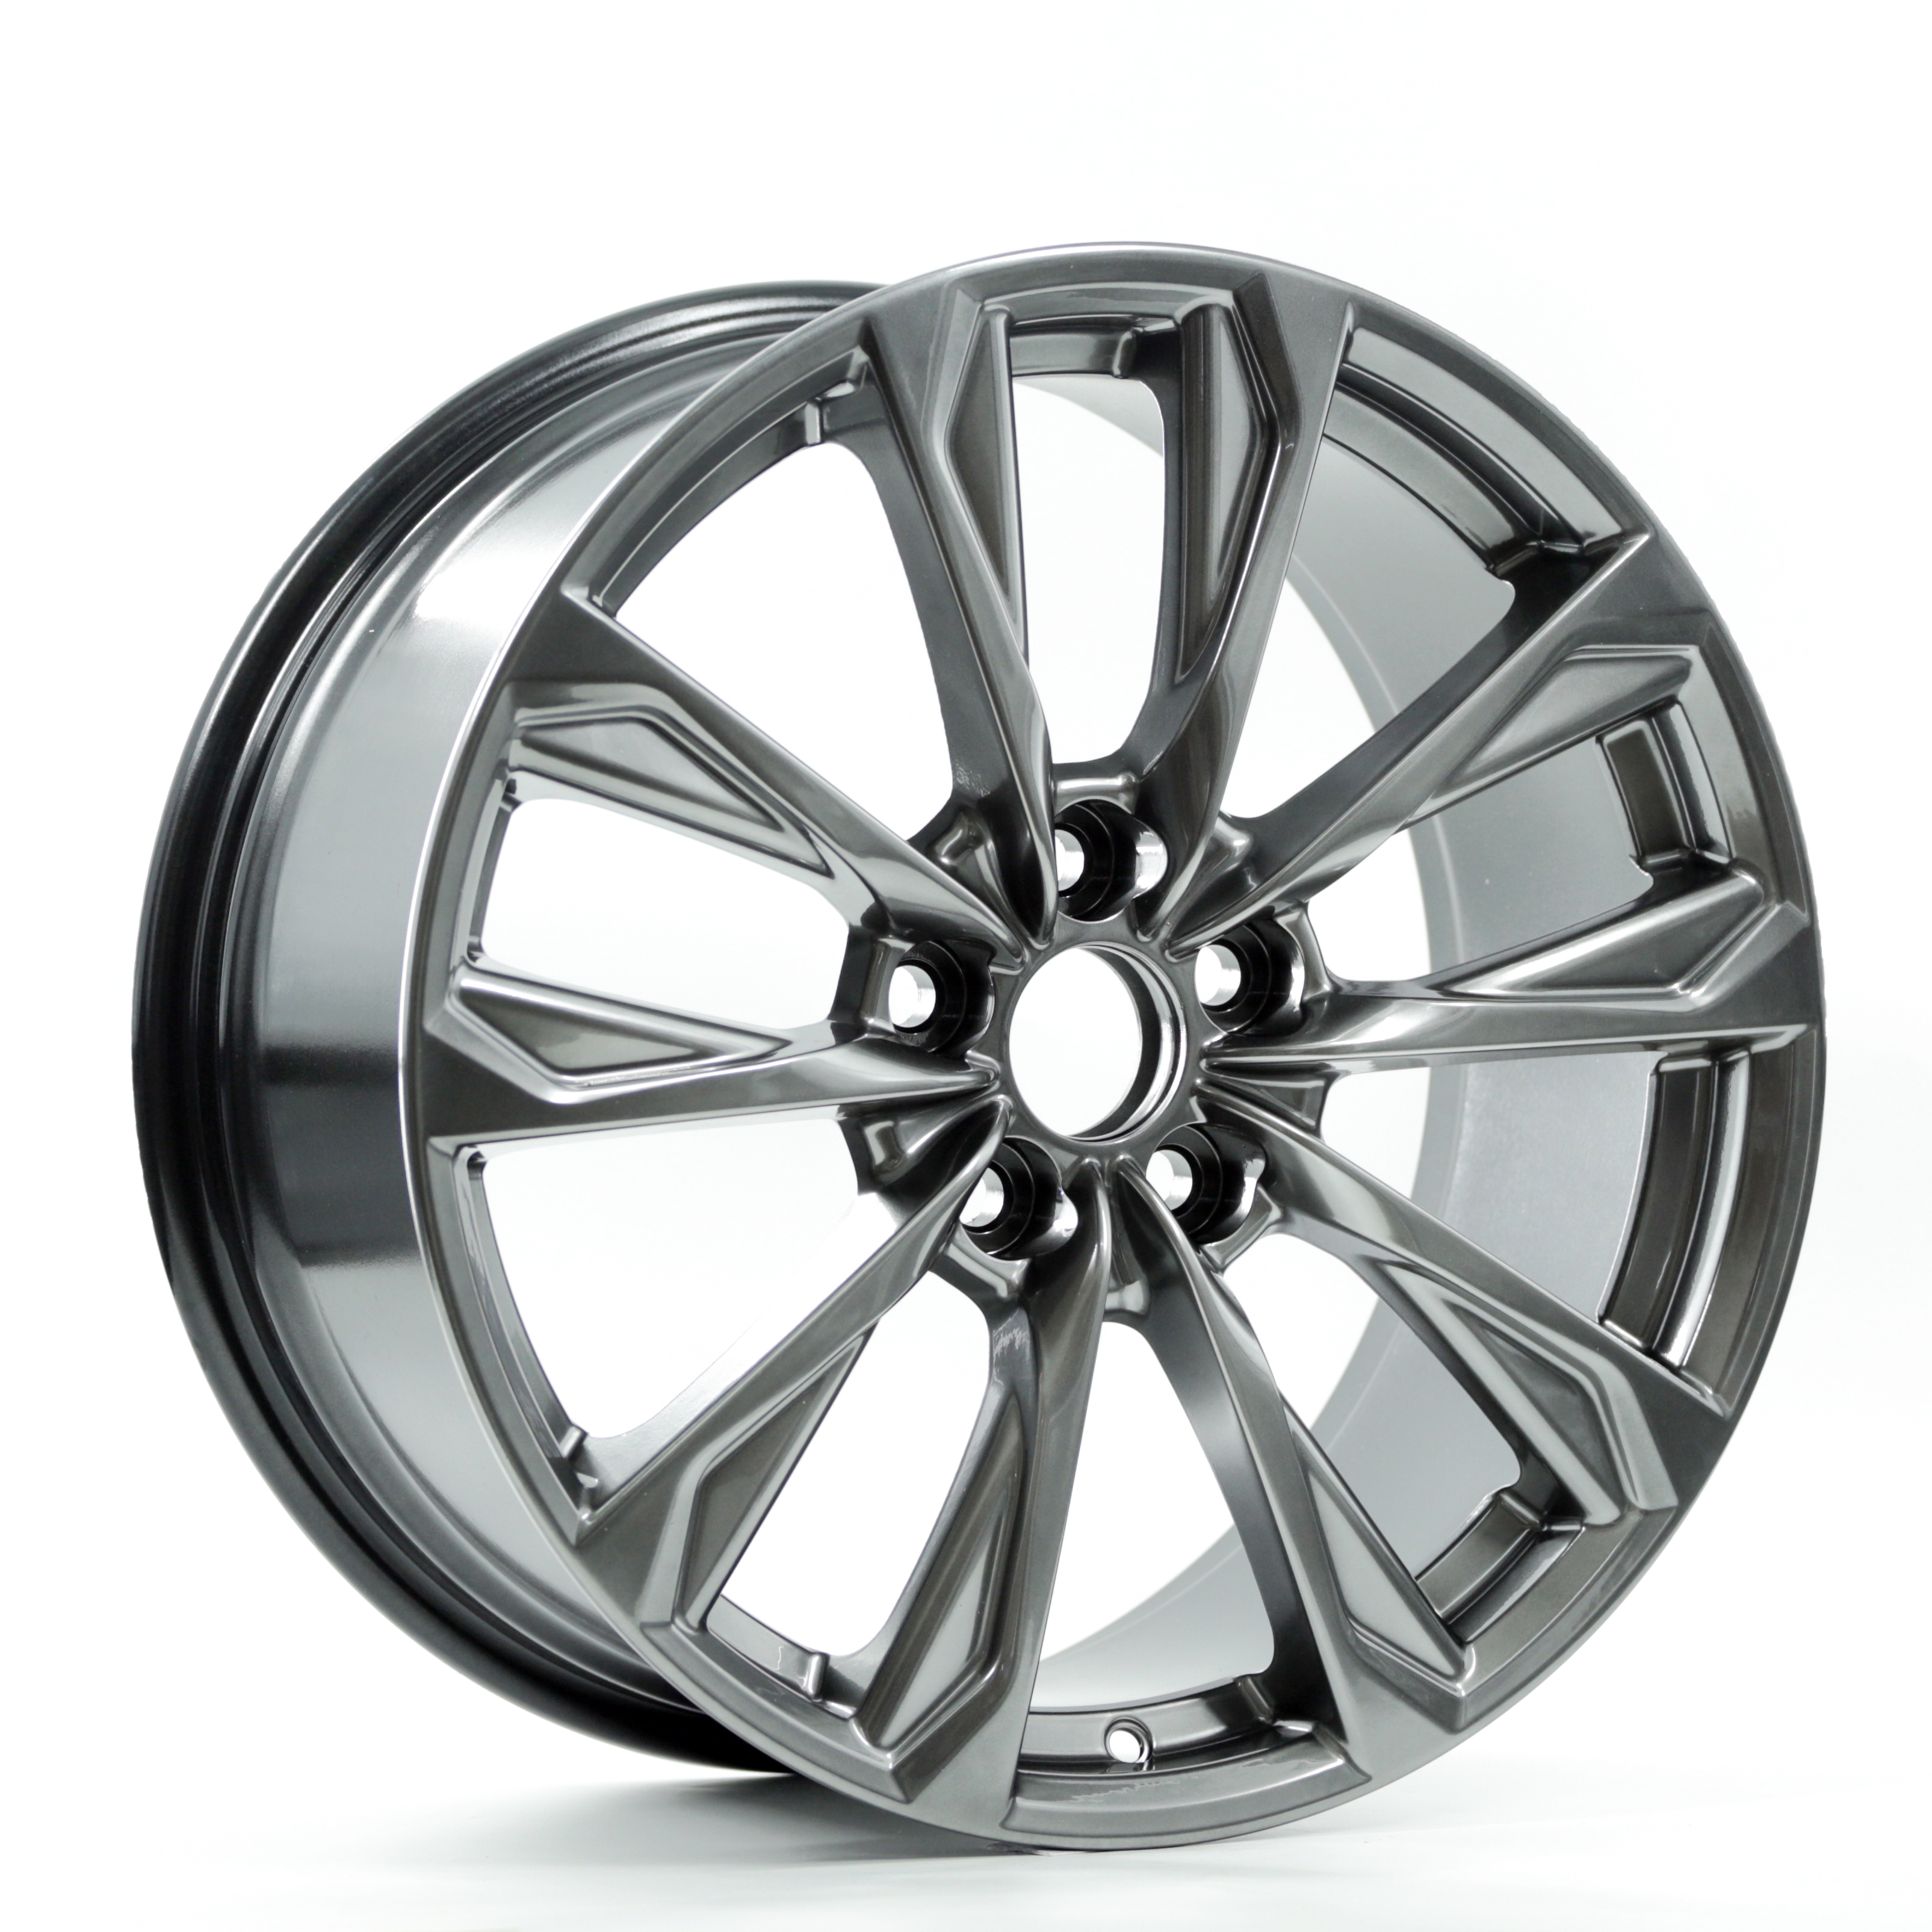 Rayone Wheels Factory New Design Hot Sale 18inch Car Alloy Wheels For Lexus Car